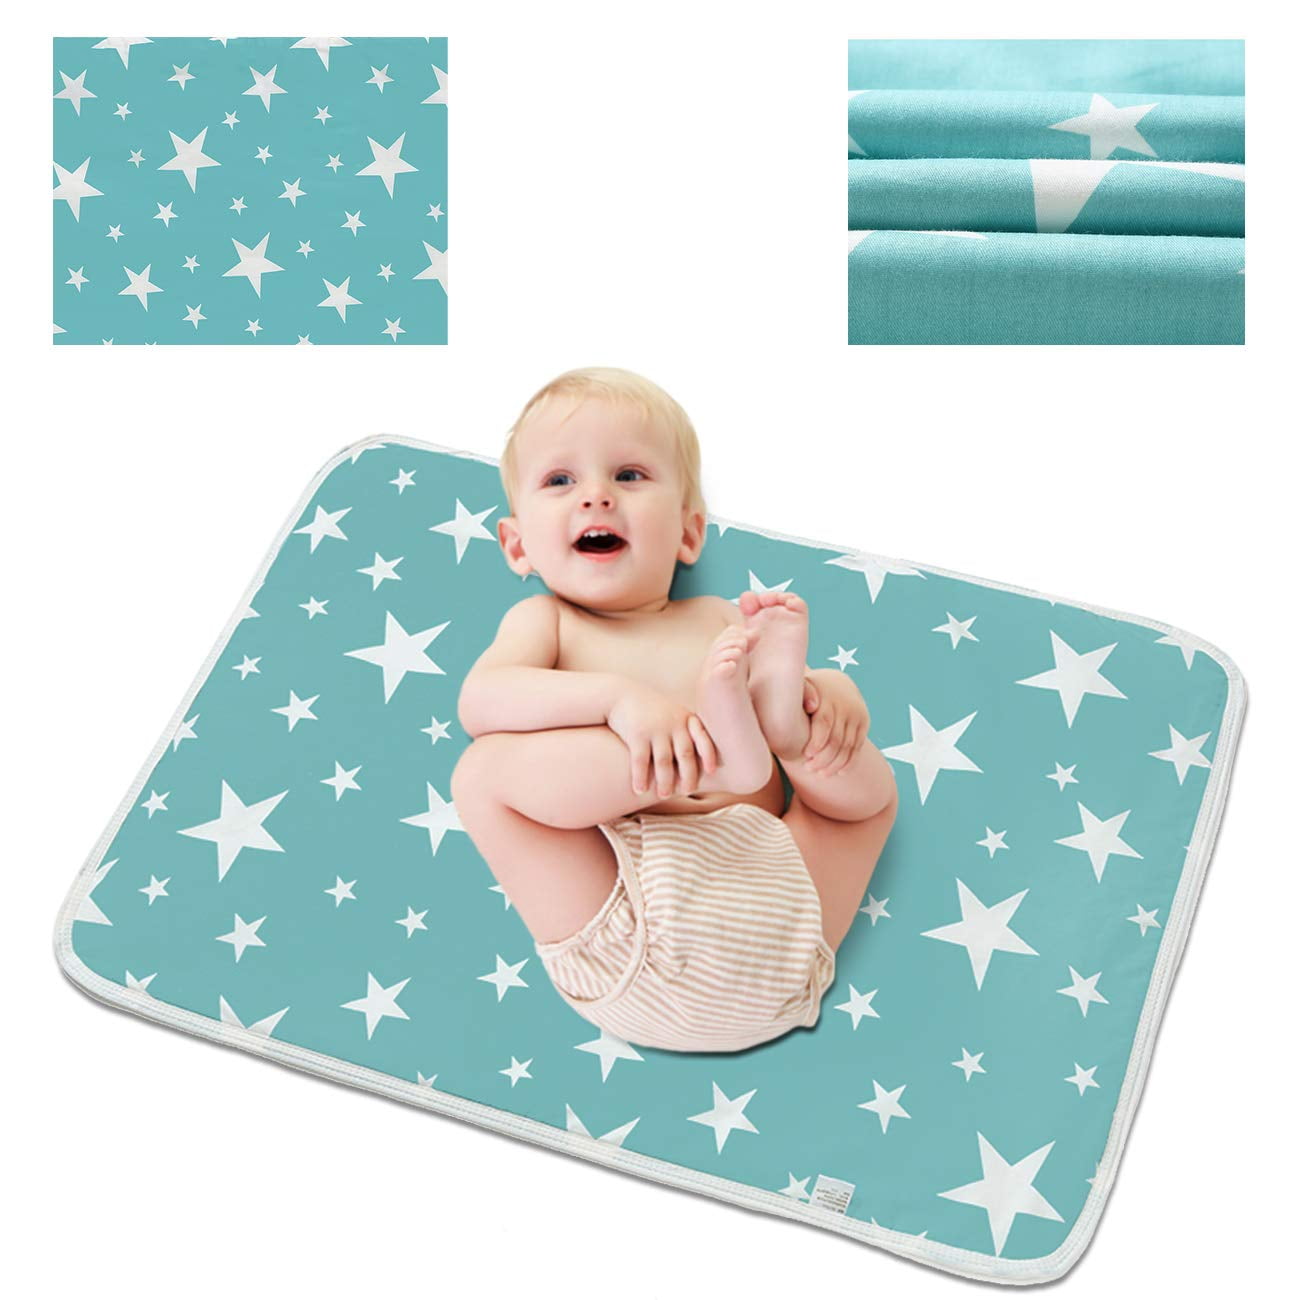 Baby Infant Toddler Changing Mat Waterproof Urine Pad Mat Supplies FI 